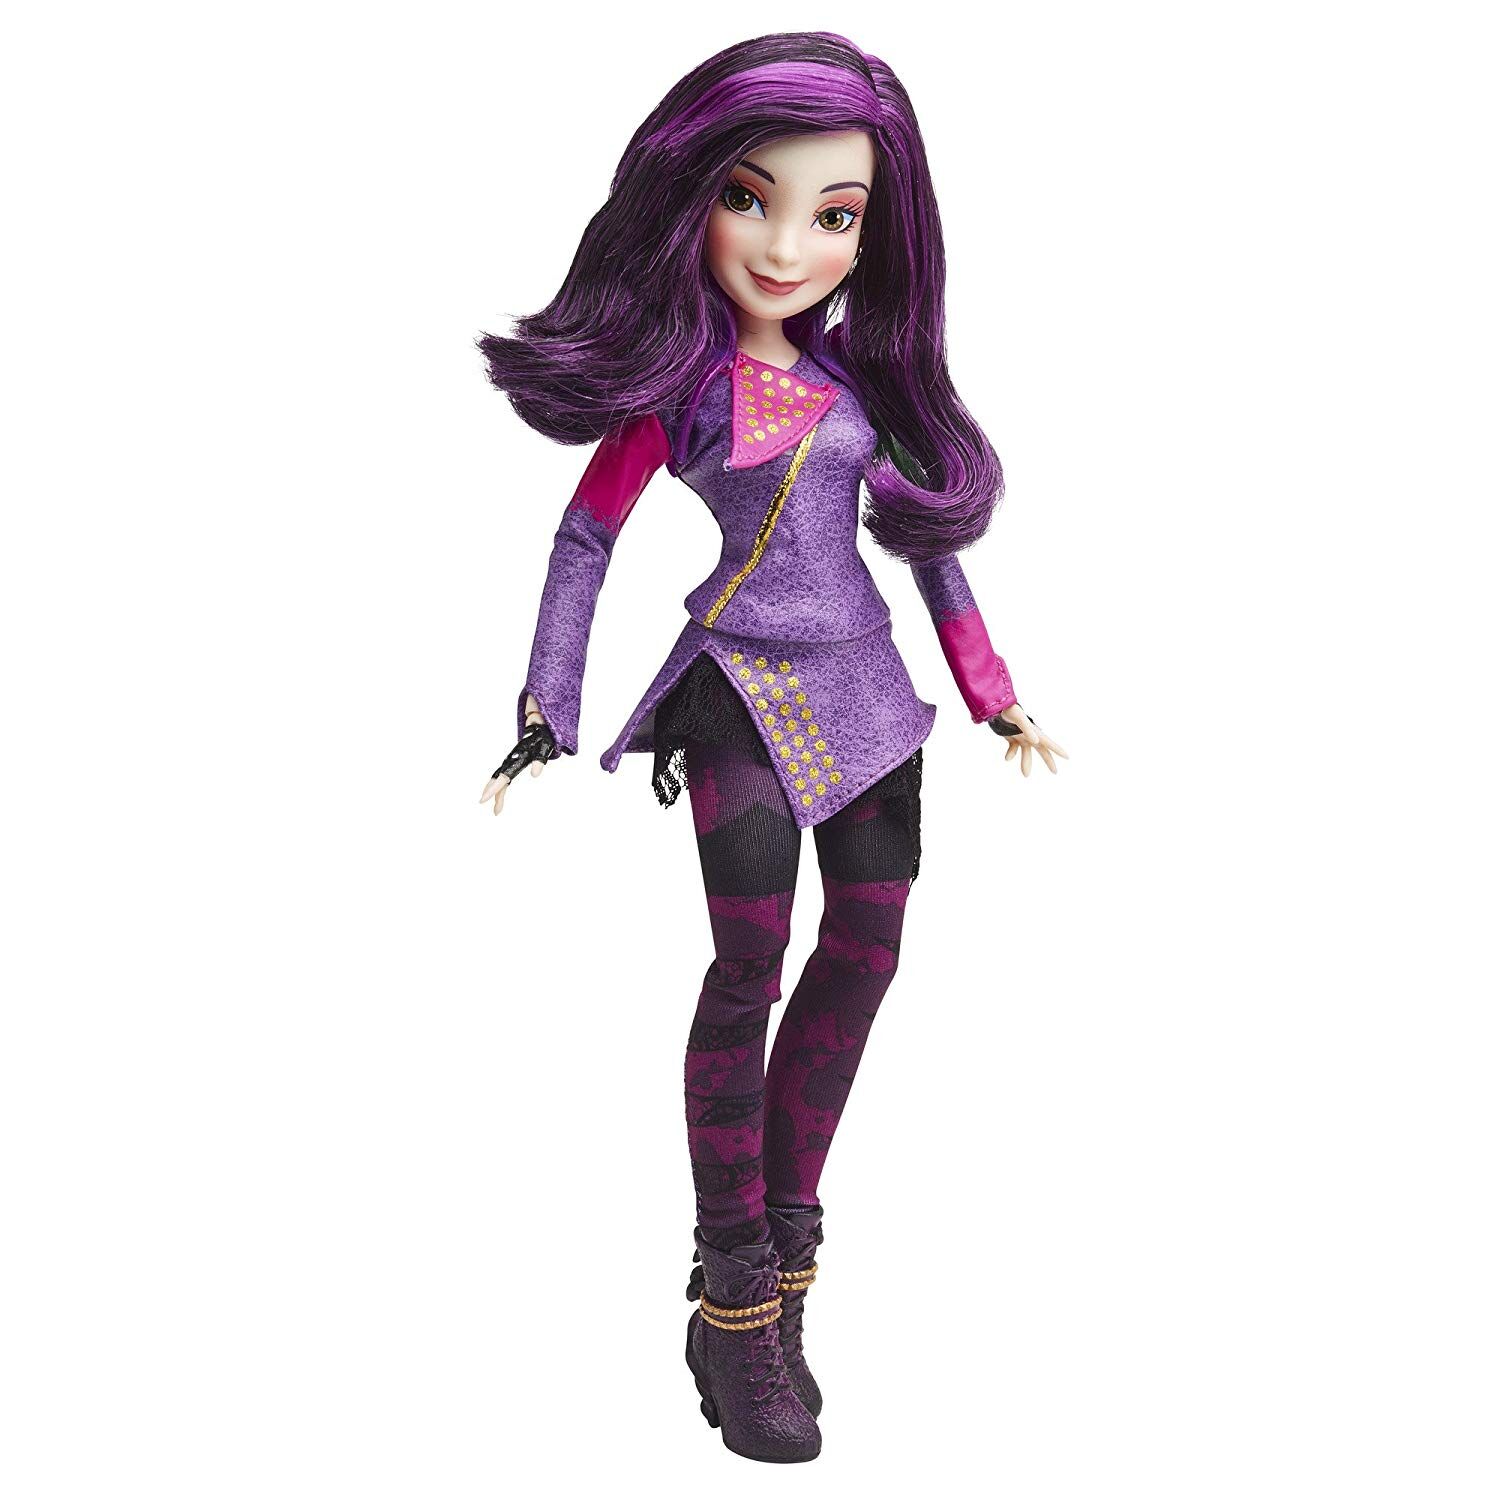 Hasbro Unveils Disney's Descendants Fashion Doll Line - The Toy Insider